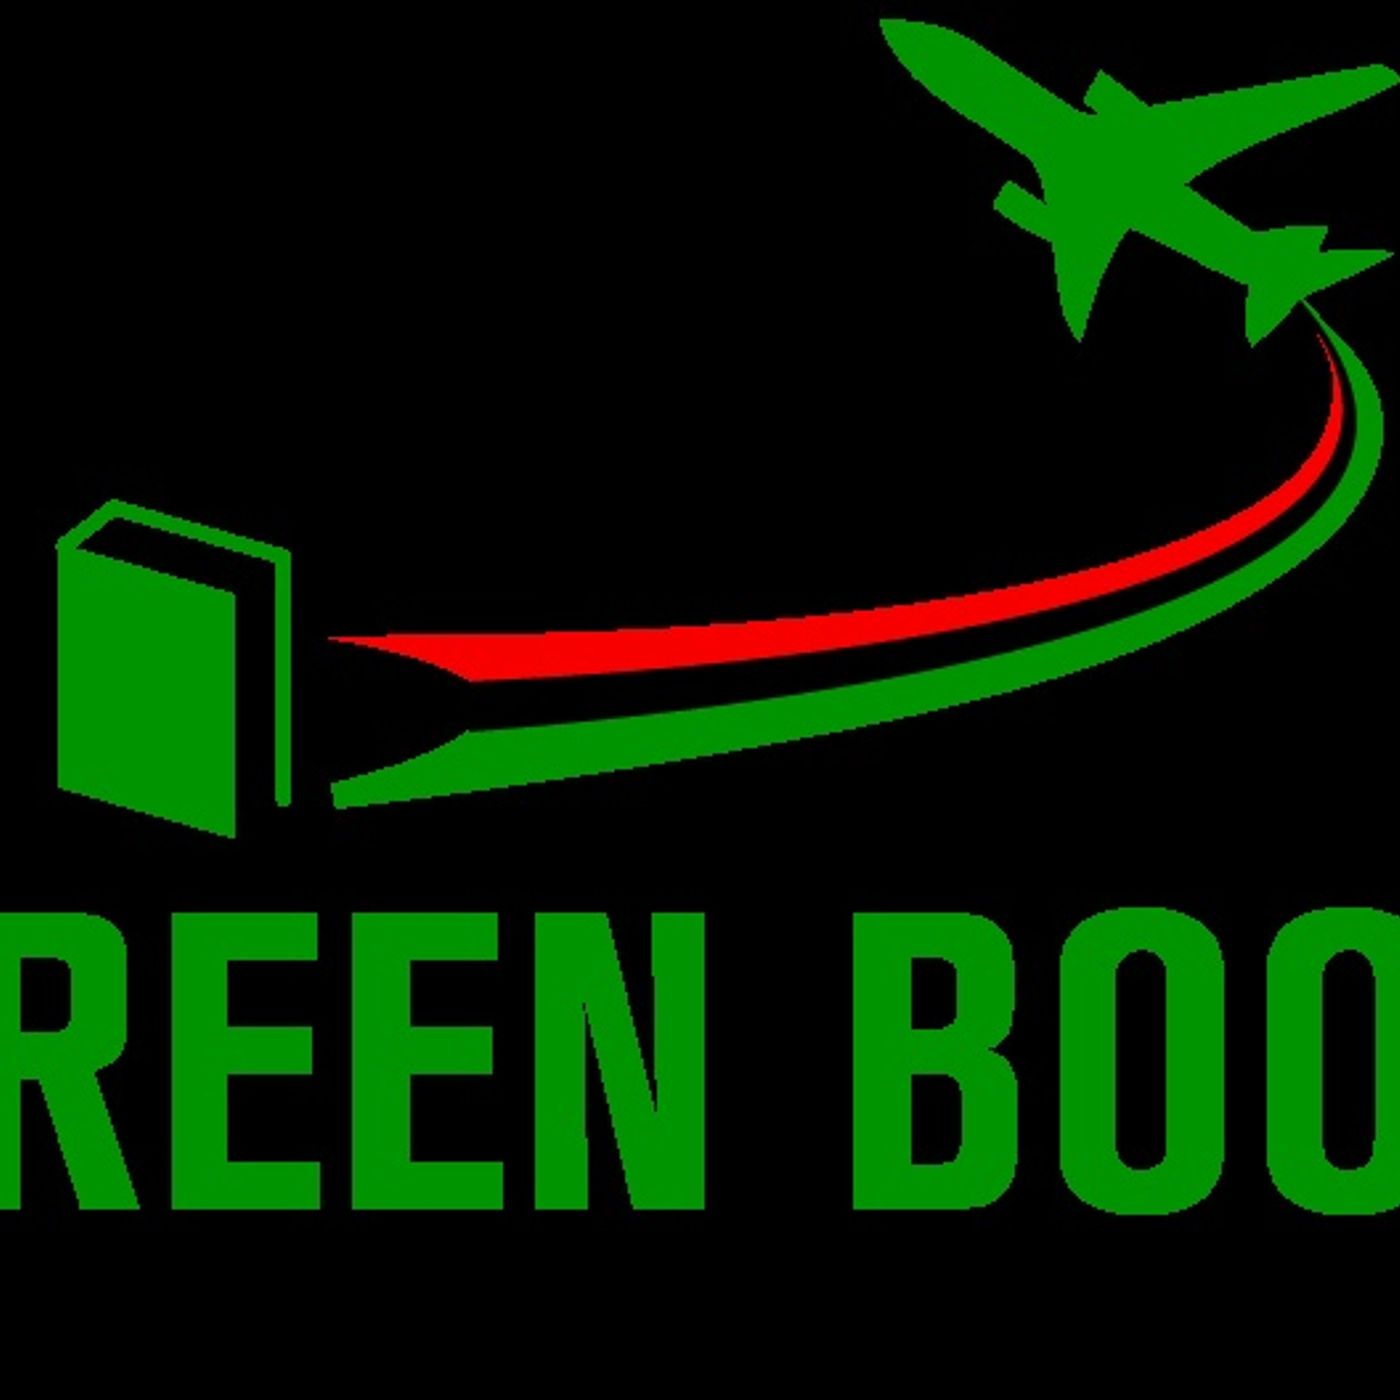 Green Book Global: The Black Traveler's TripAdvisor